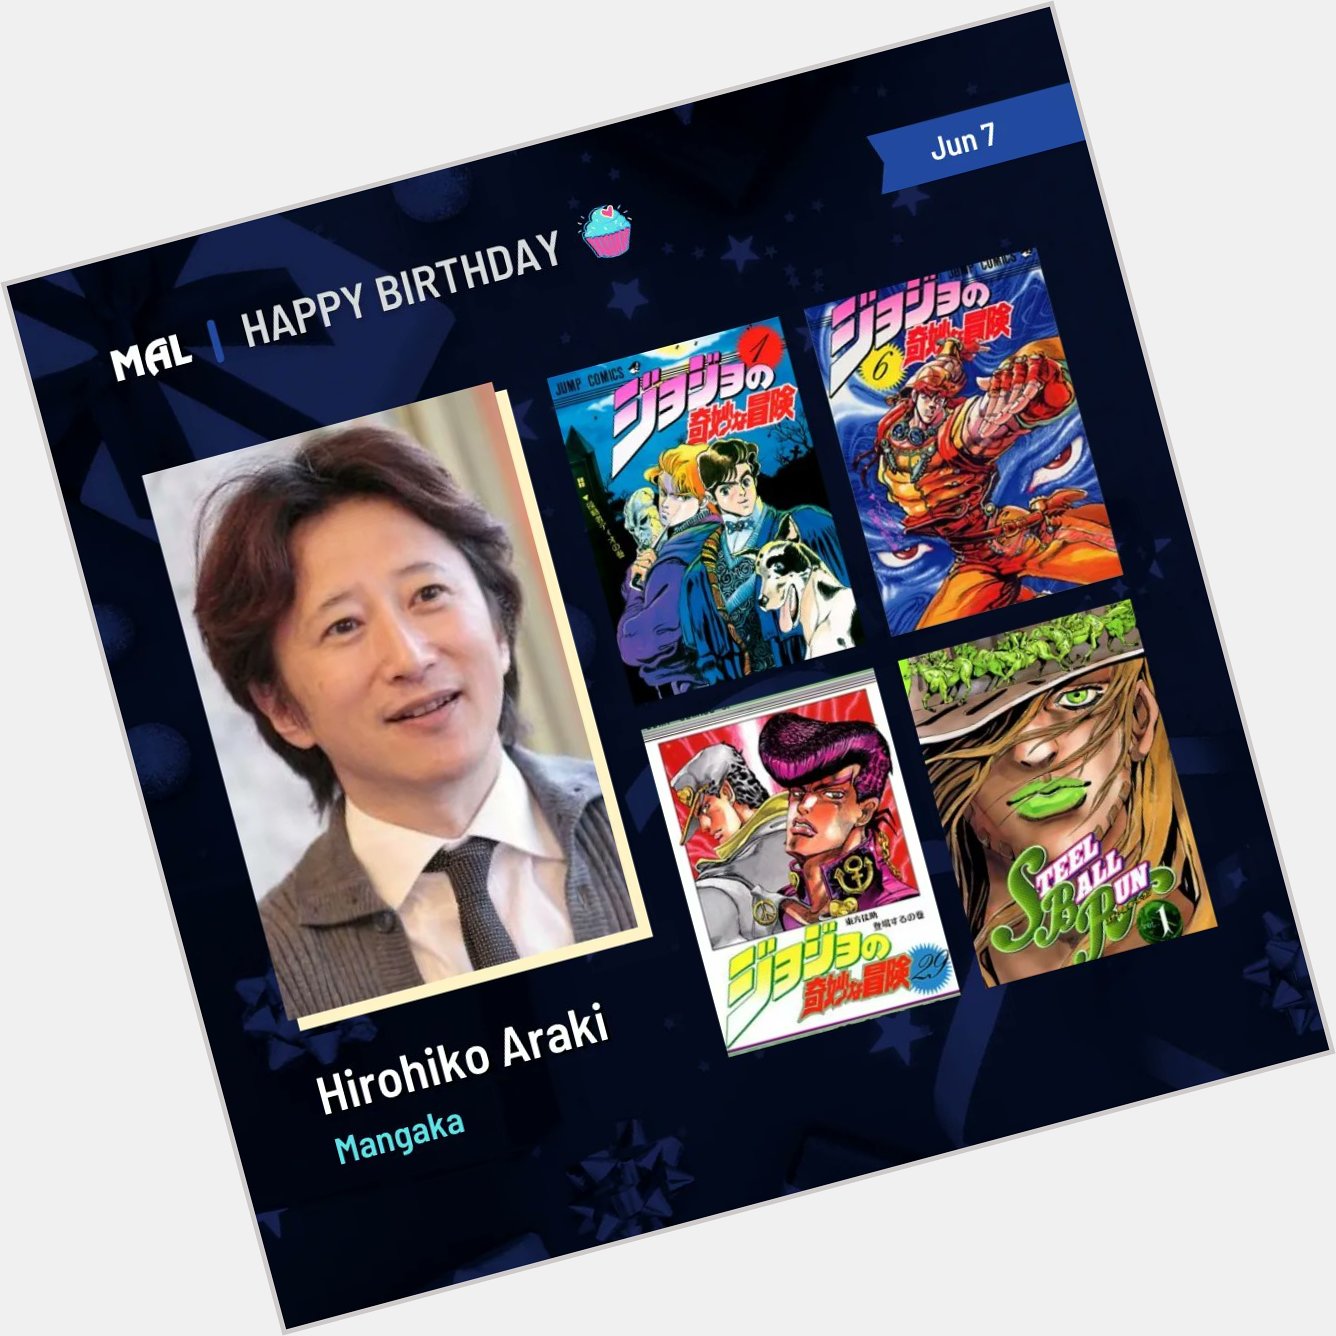 Happy Birthday to Hirohiko Araki! Full profile:  